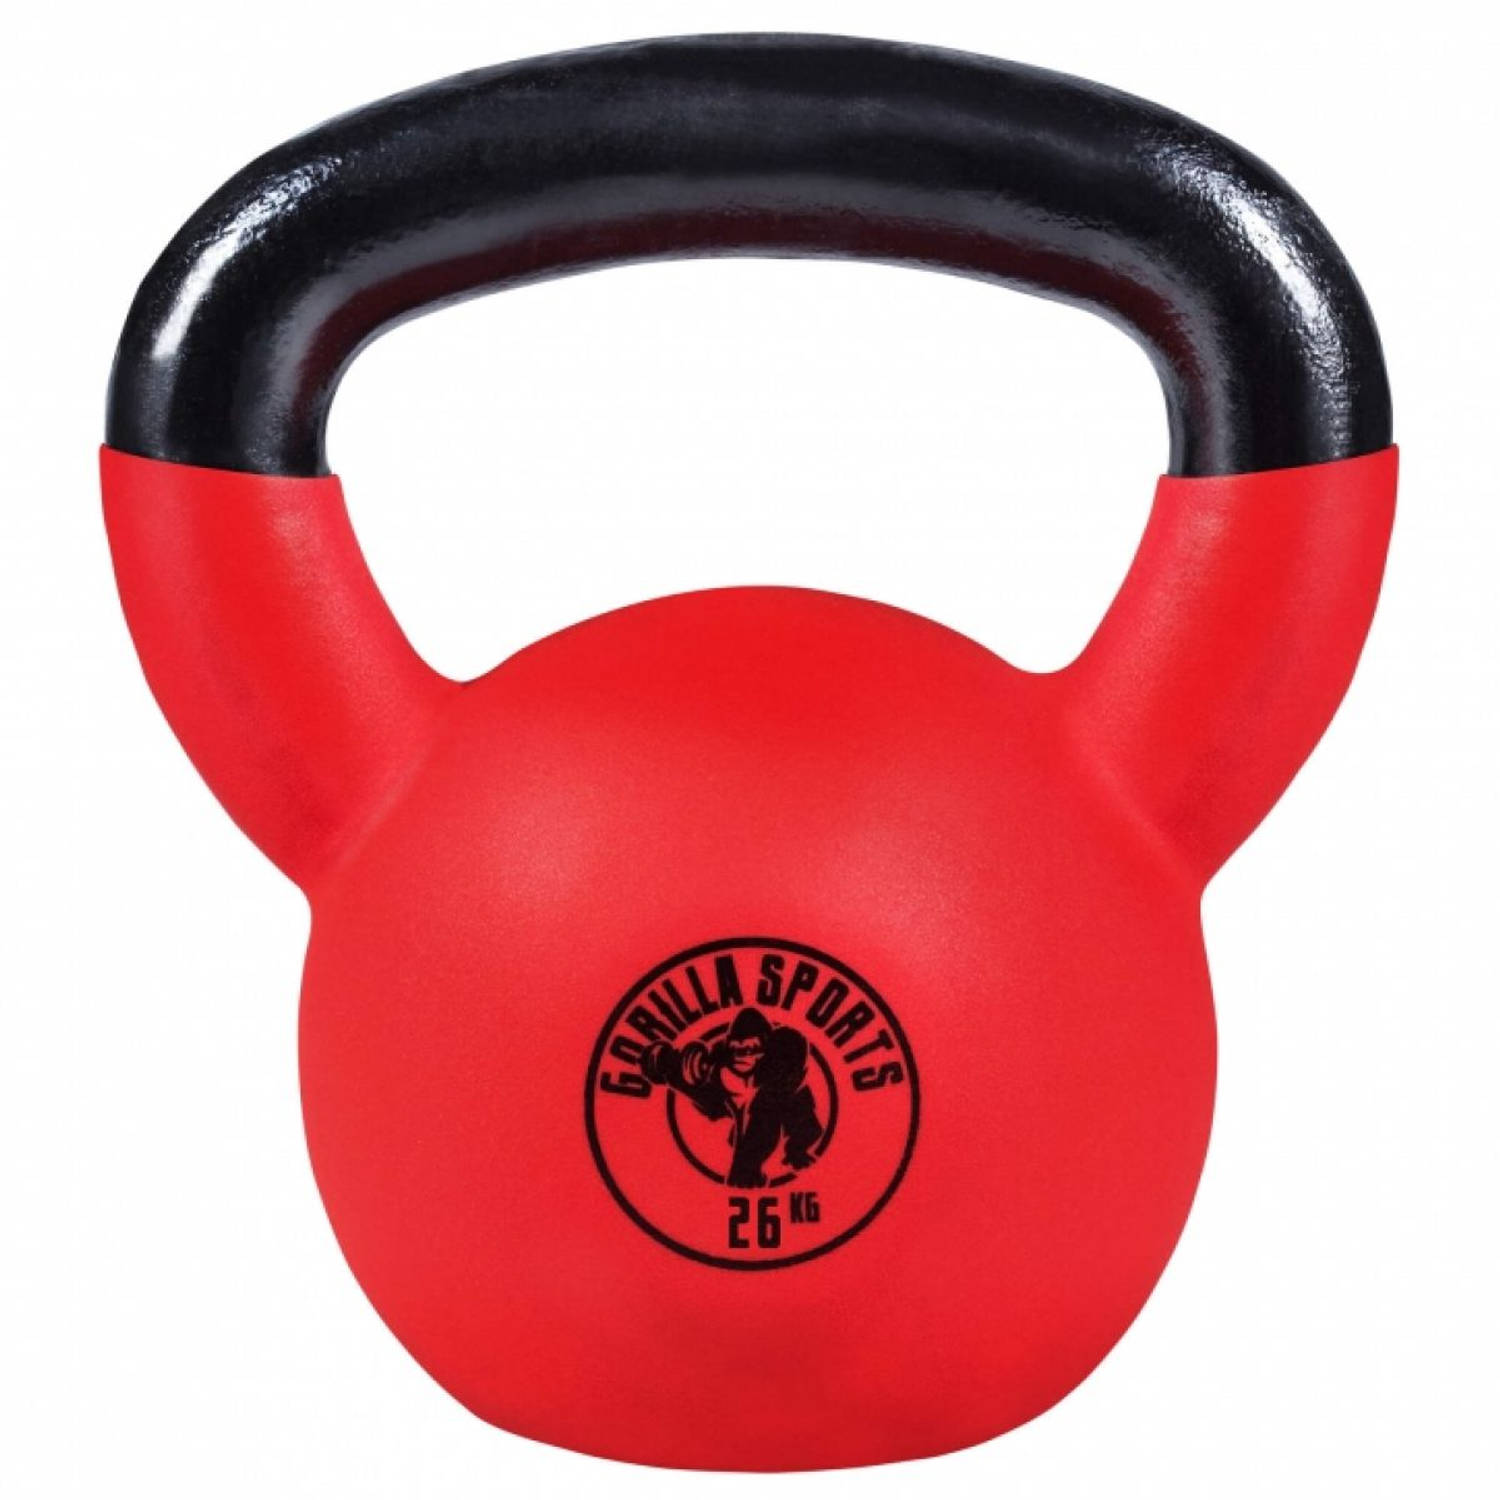 Gorilla Sports Kettlebell Gietijzer (rubber coating) 26 kg